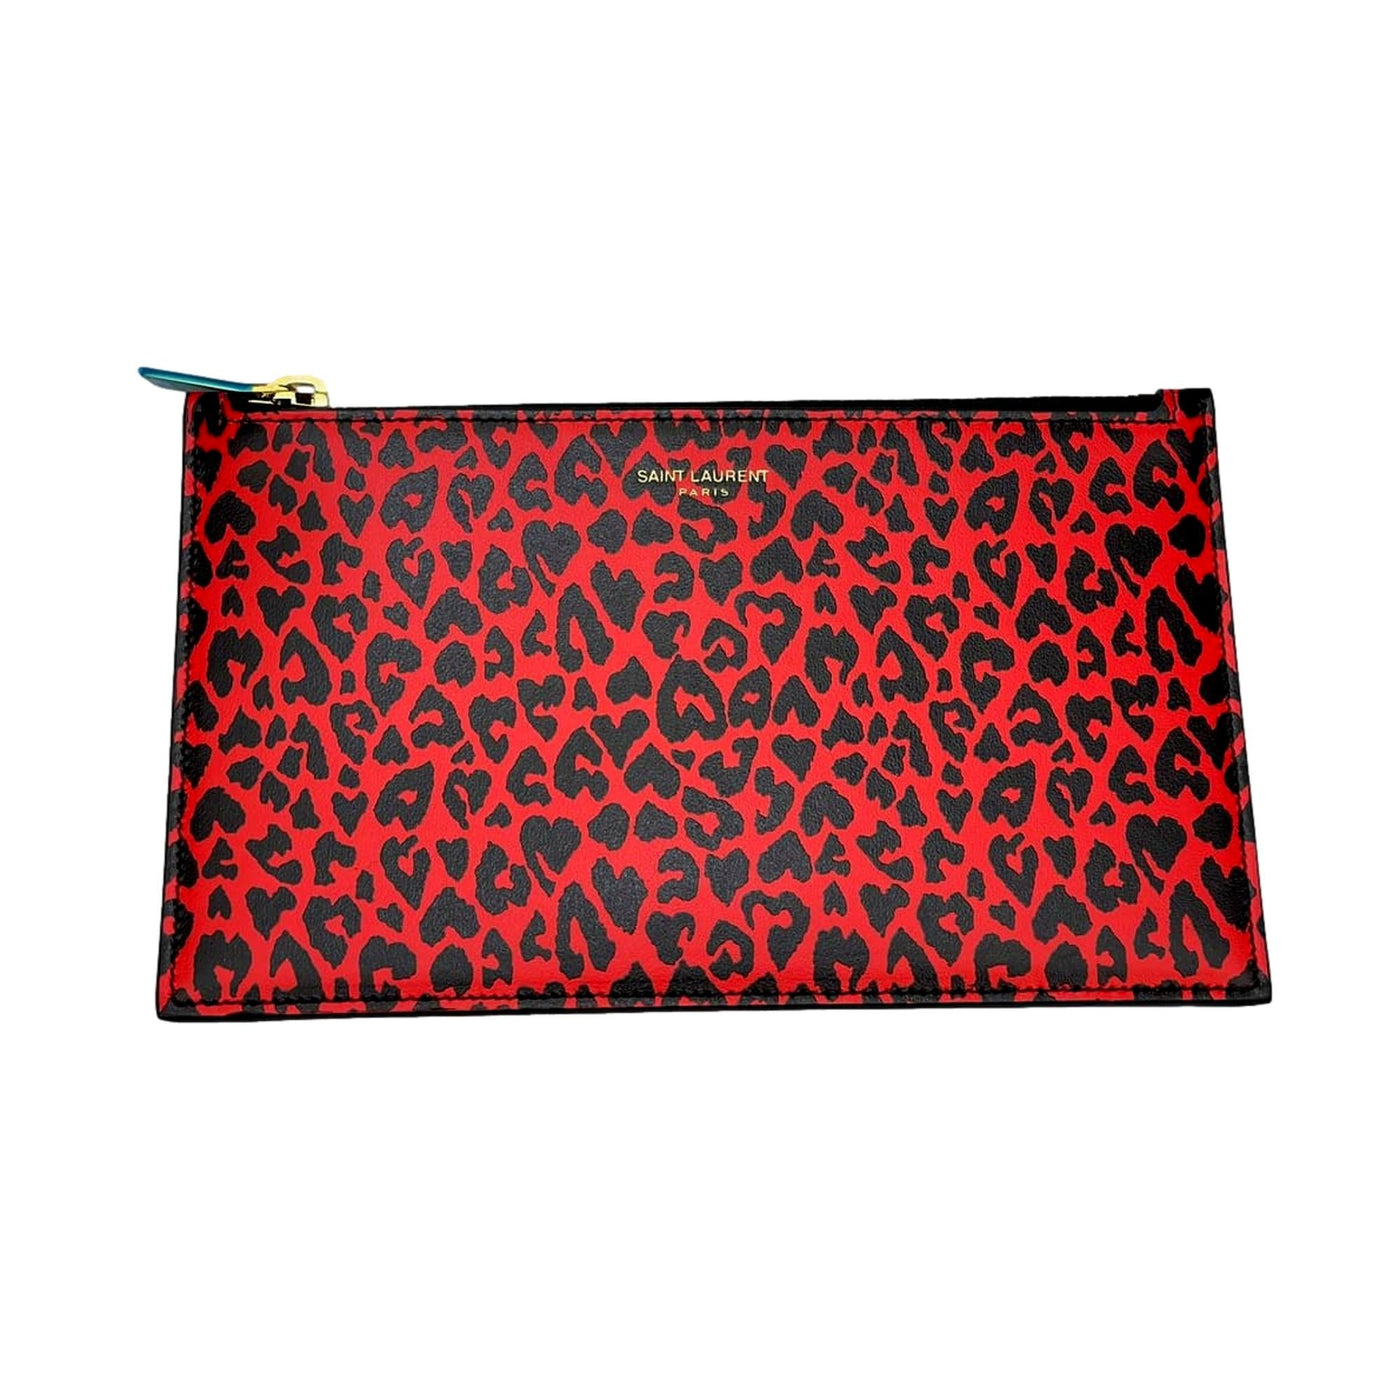 Saint Laurent Rouge Leopard Printed Calfskin Leather Medium Pouch 635098 - LUXURYMRKT